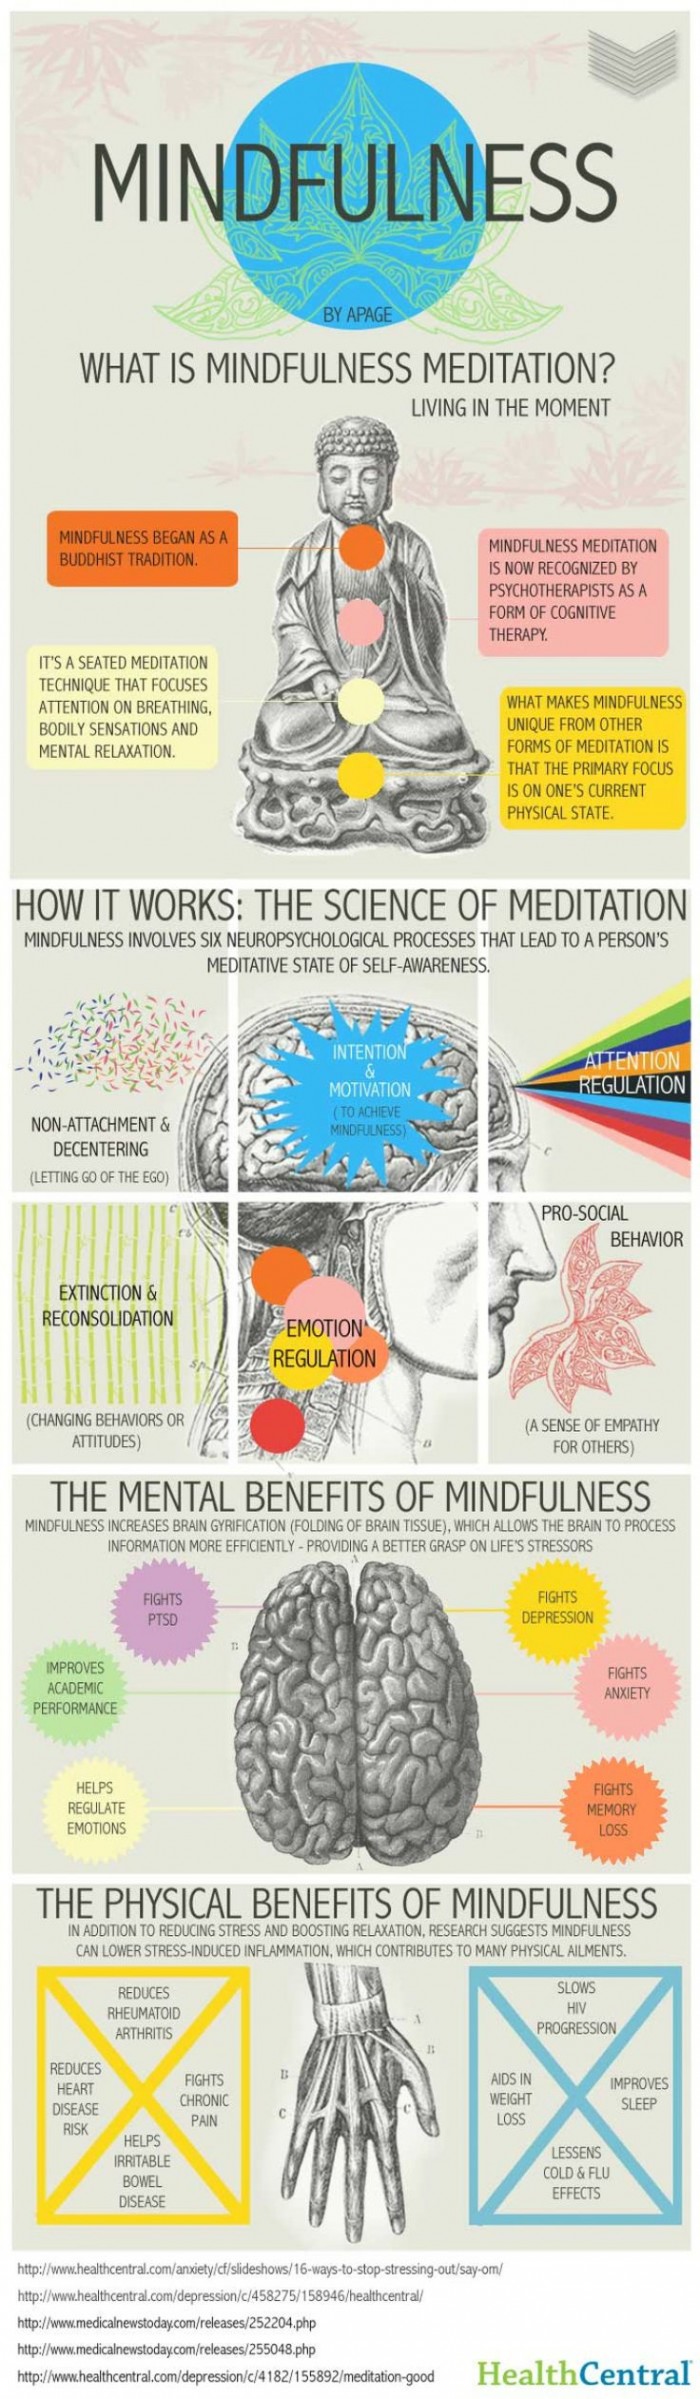 mindfulness infographic